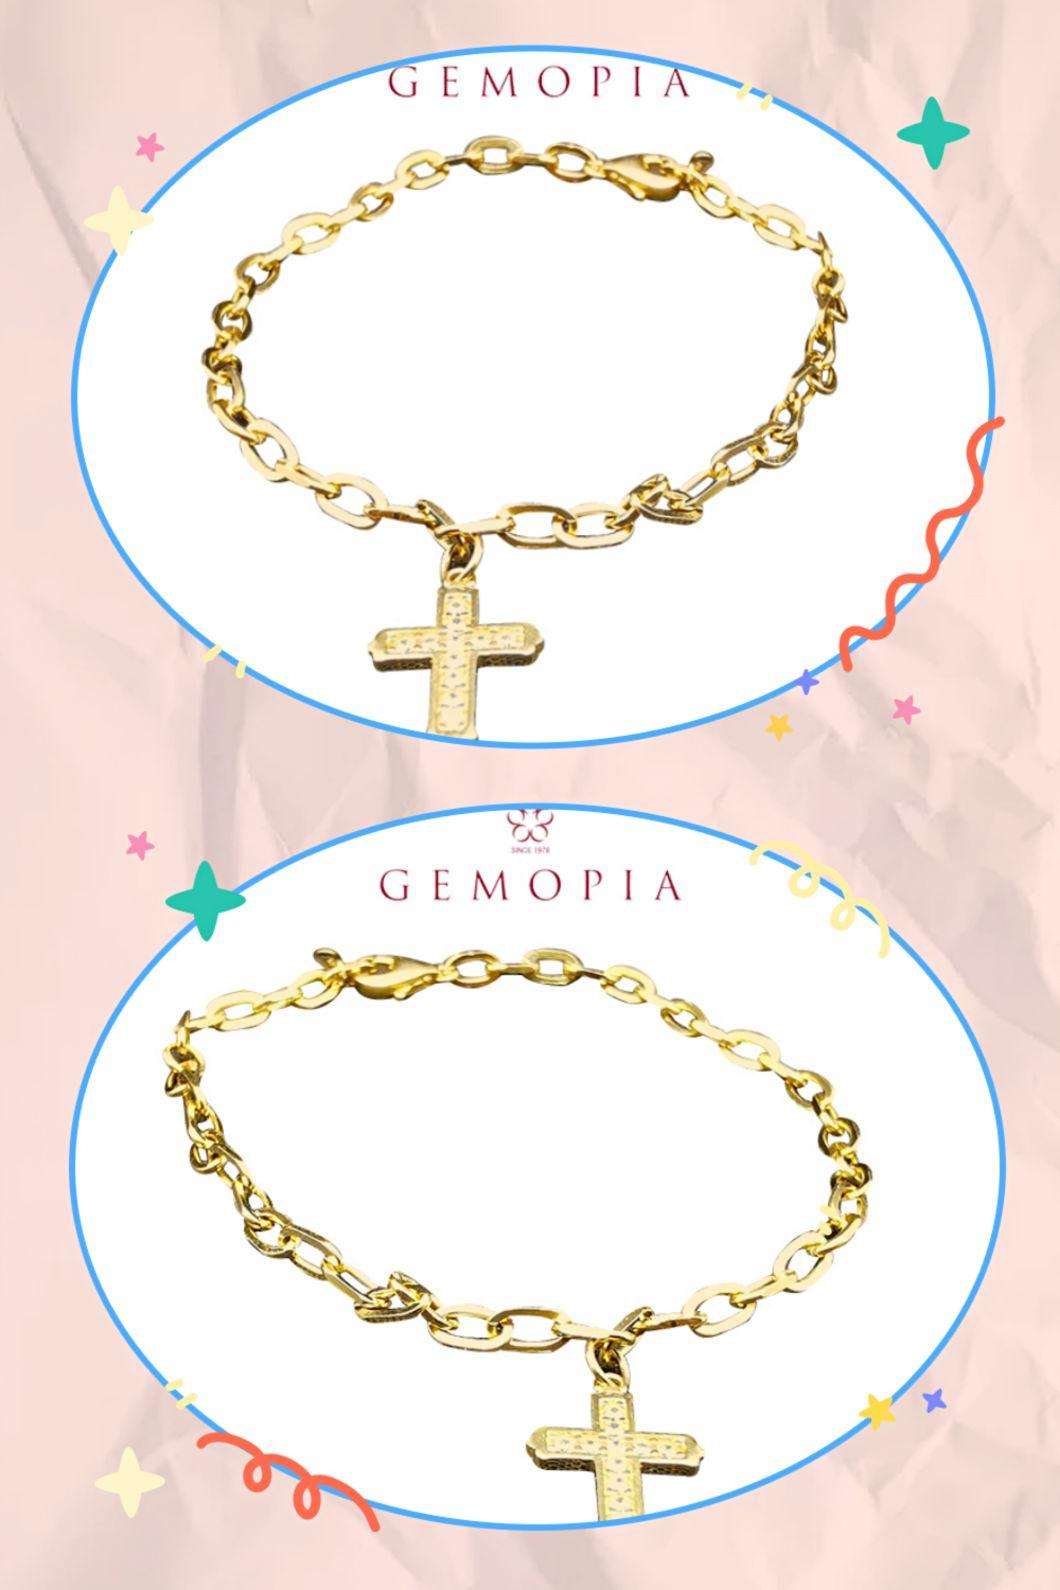 New Fshion 18K Gold Plated Charm Women Bracelet Chain Man Bracelet Jewelry